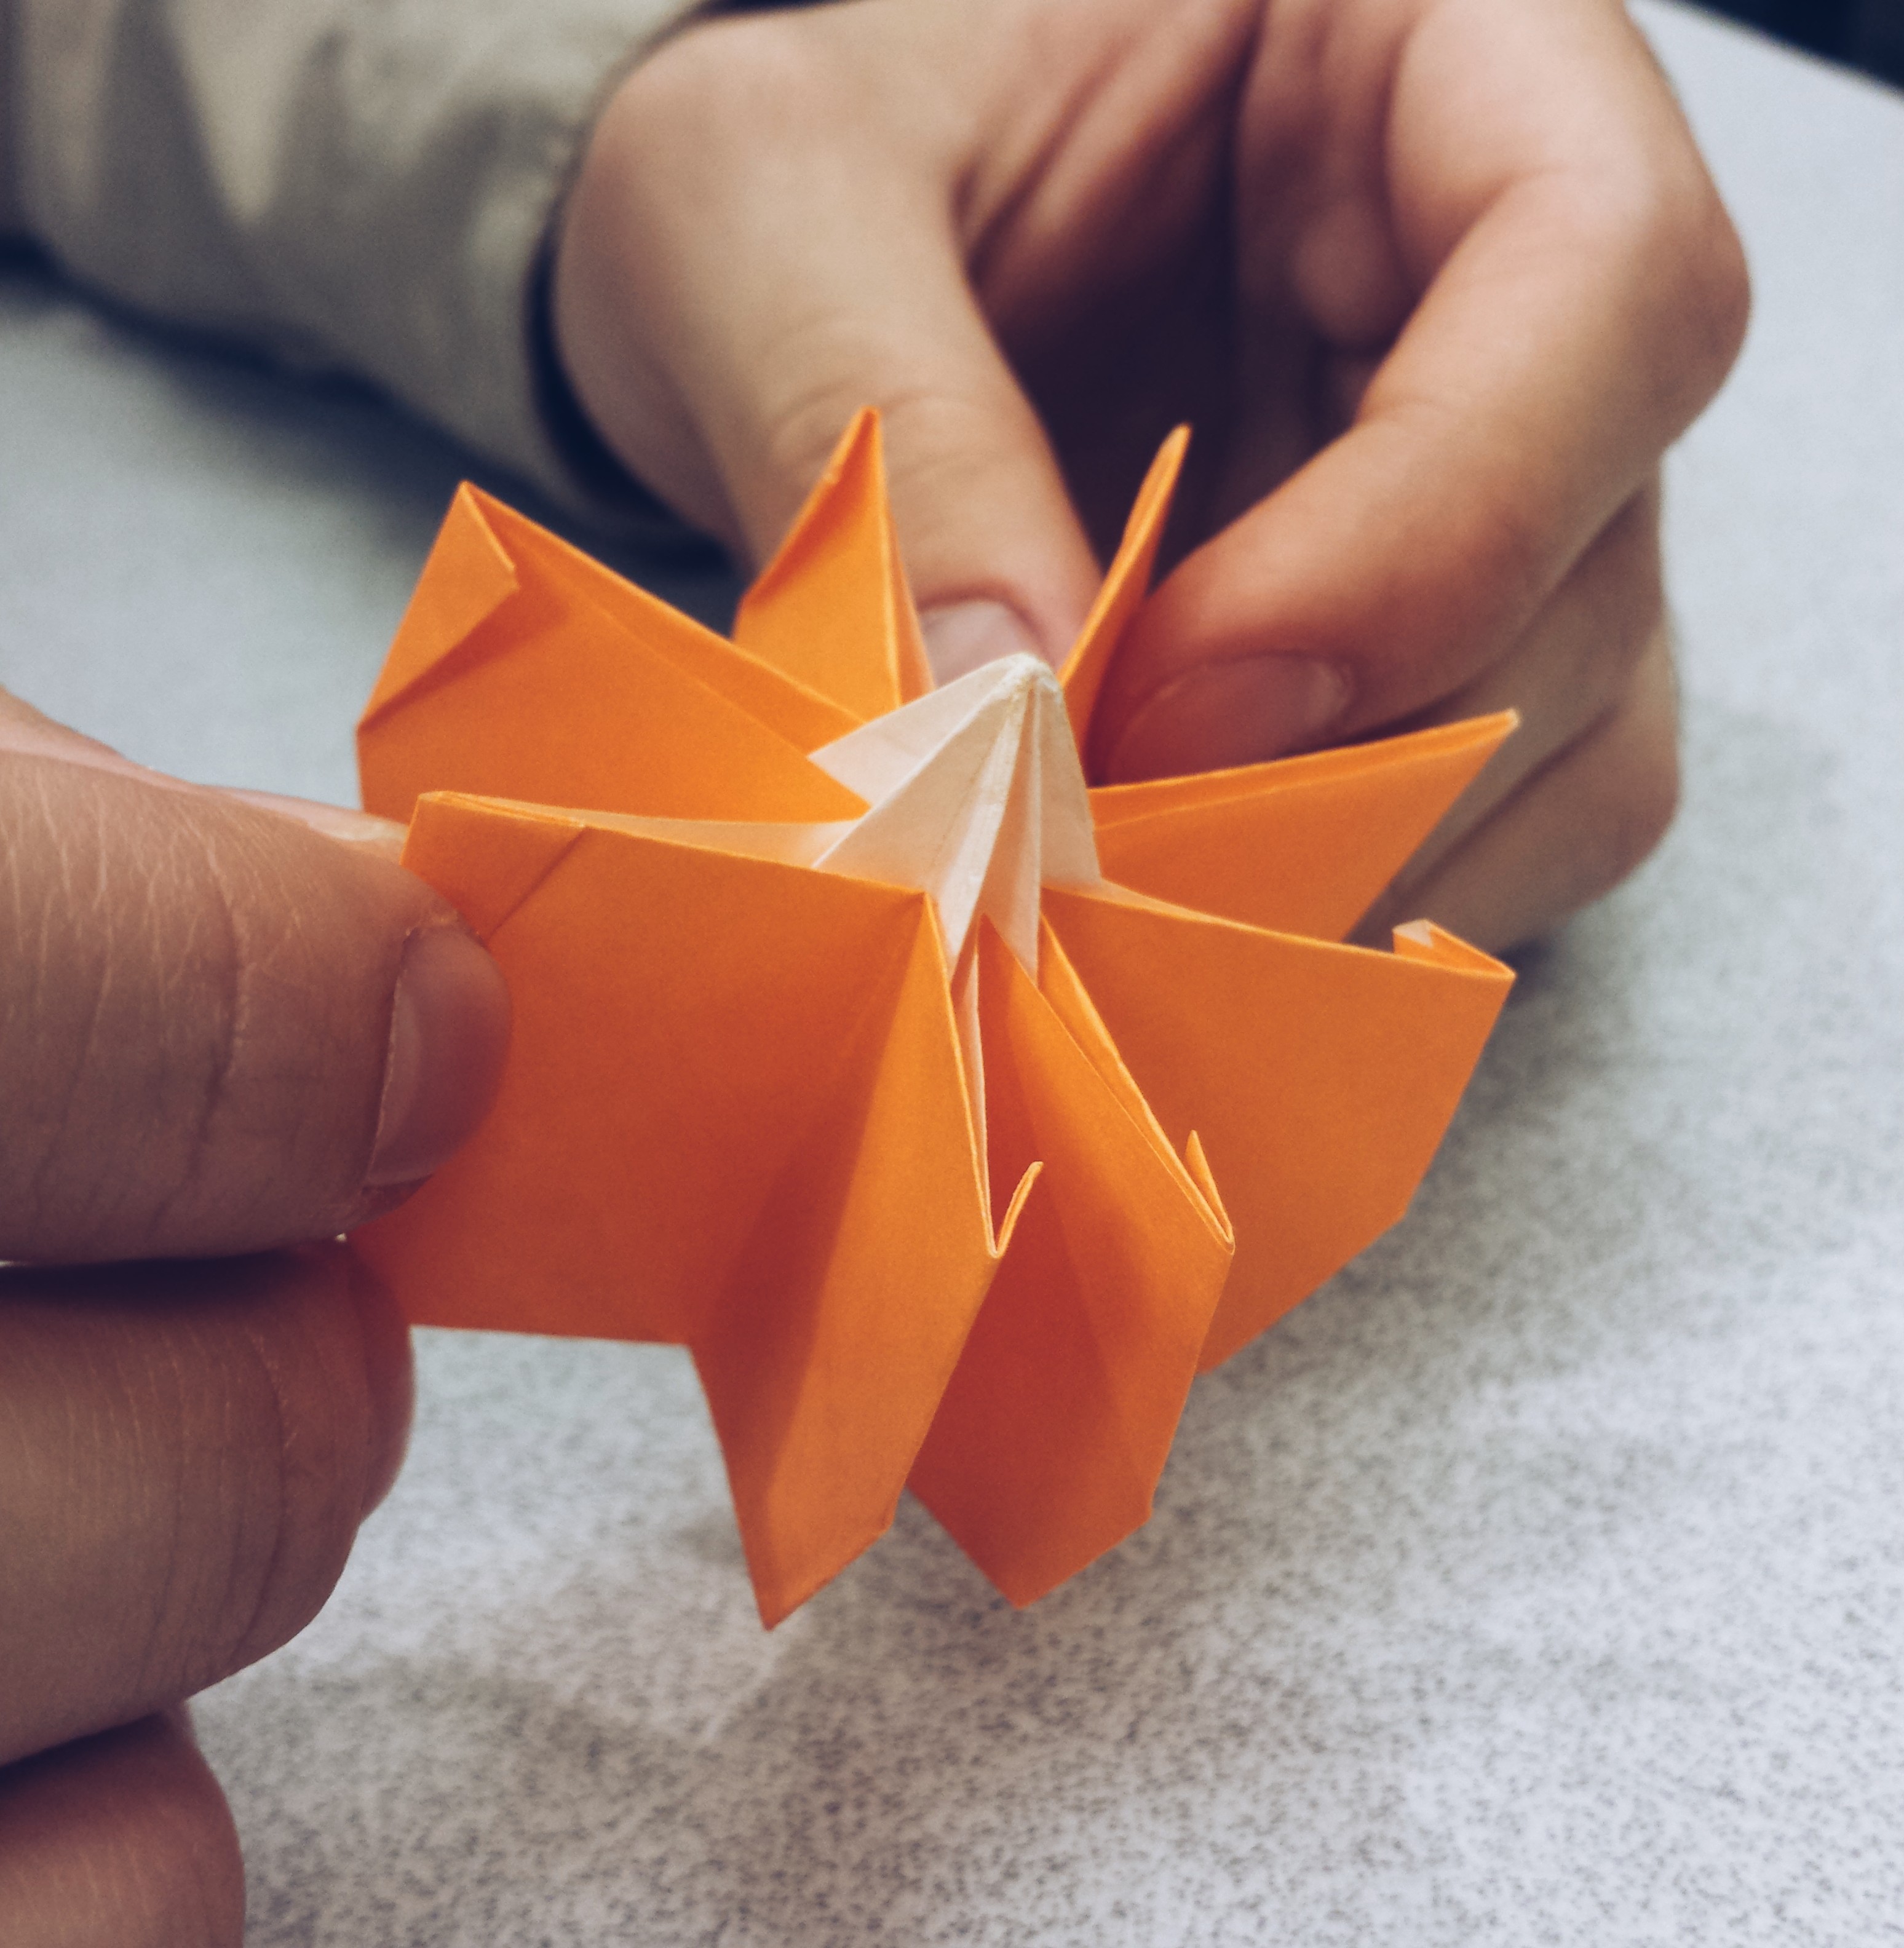 My friend Johnny folding an origami orange pumpkin for the Halloween workshop.